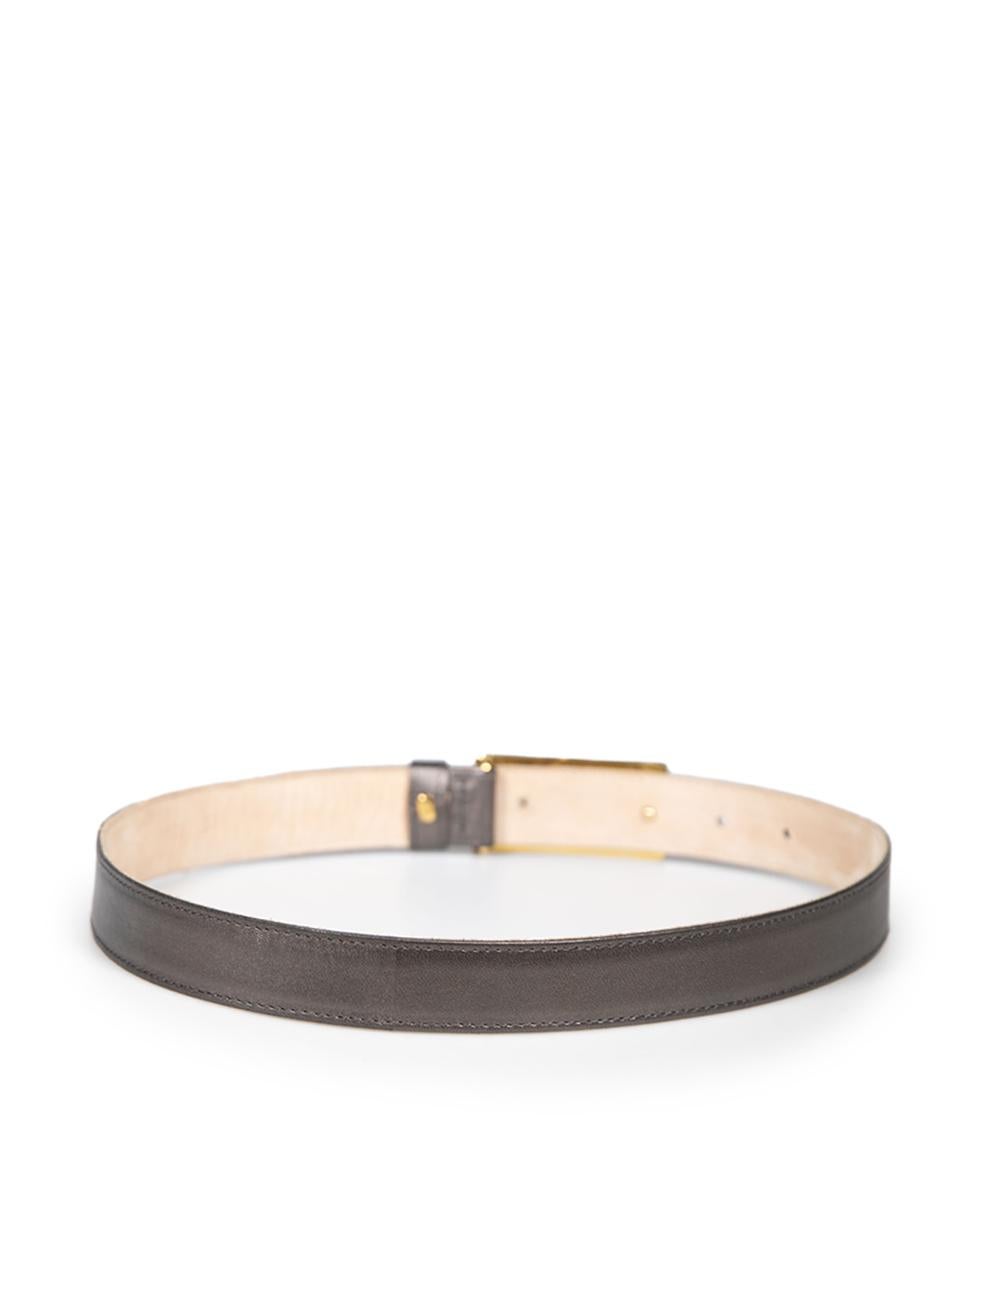 Escada Grey Metallic Leather Logo Buckle Belt In Good Condition For Sale In London, GB